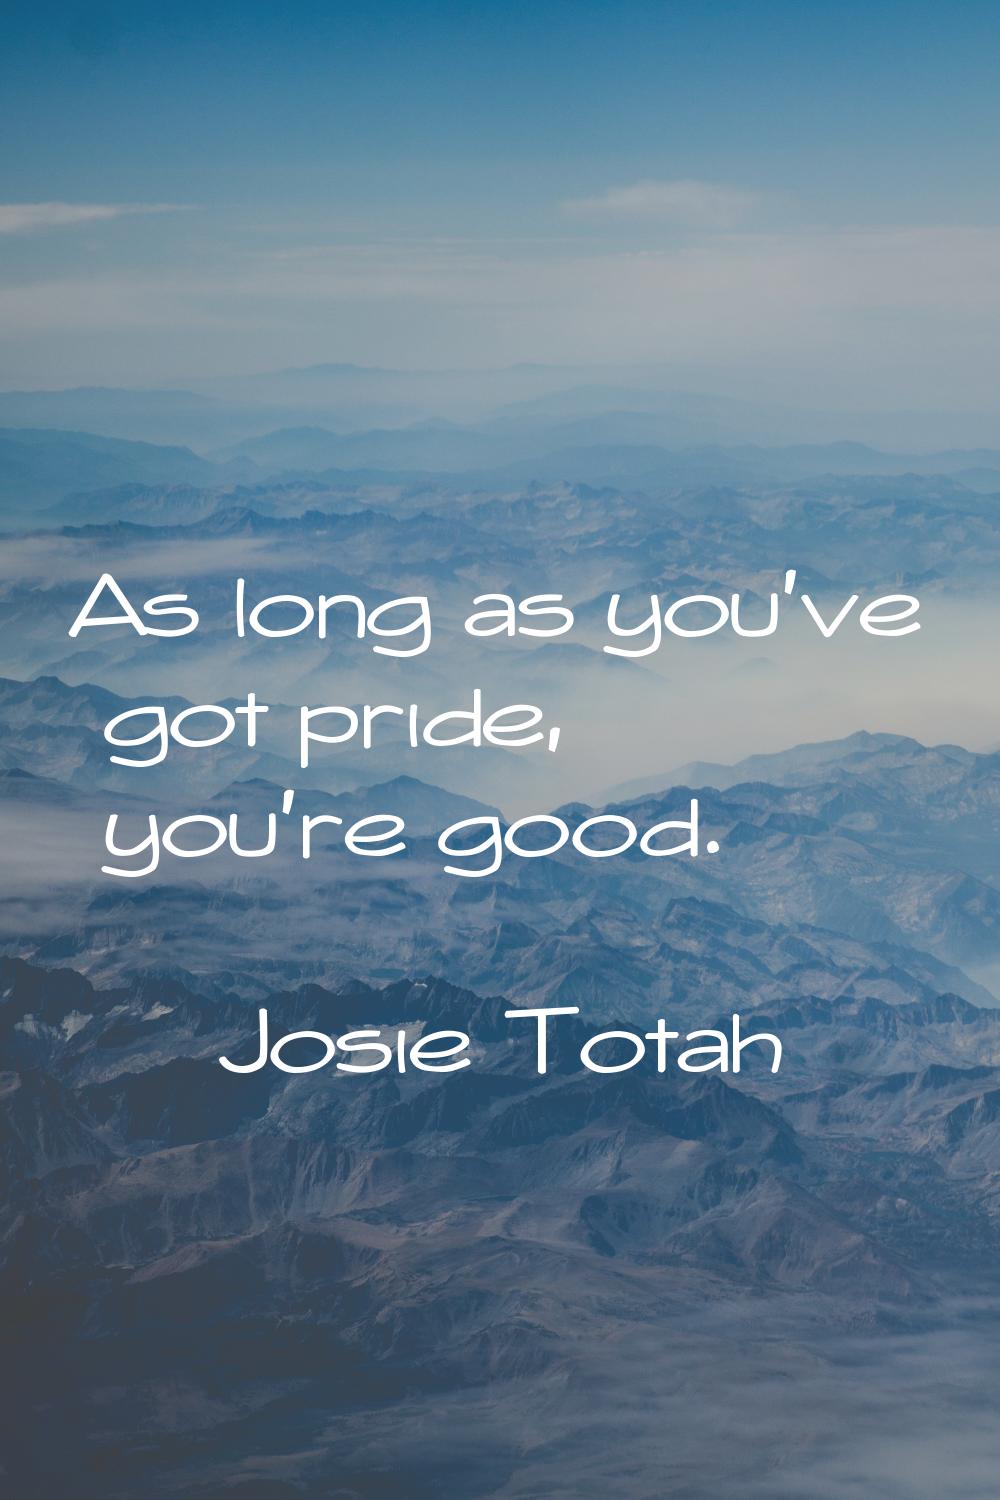 As long as you've got pride, you're good.